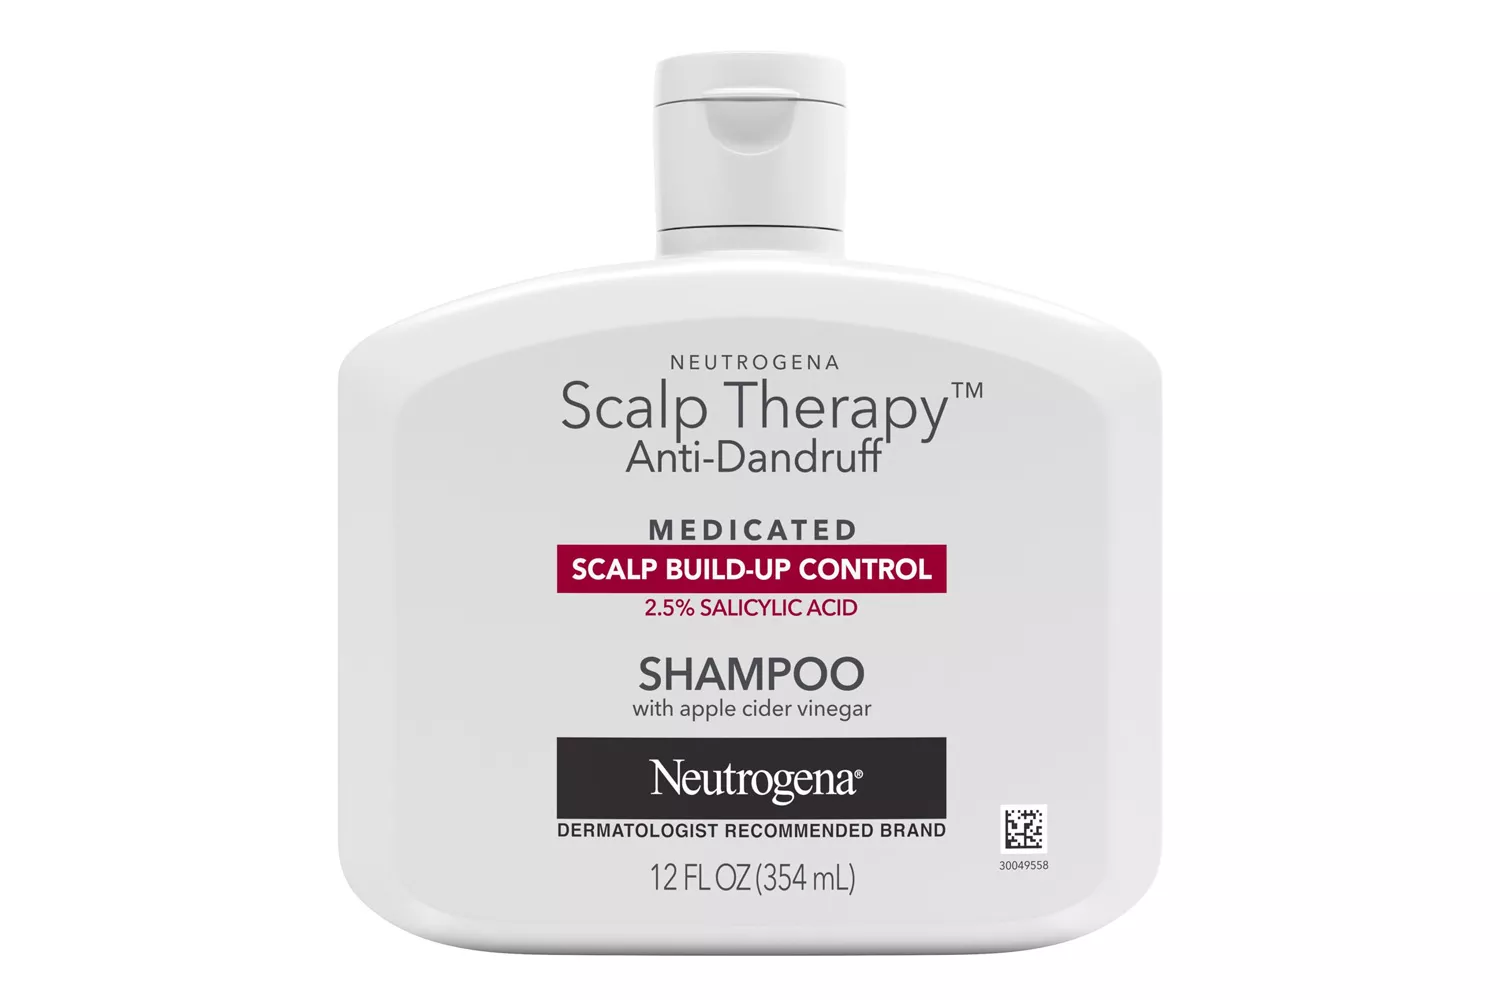 Neutrogena Scalp Therapy Anti-Dandruff Scalp Build-up Control Shampoo